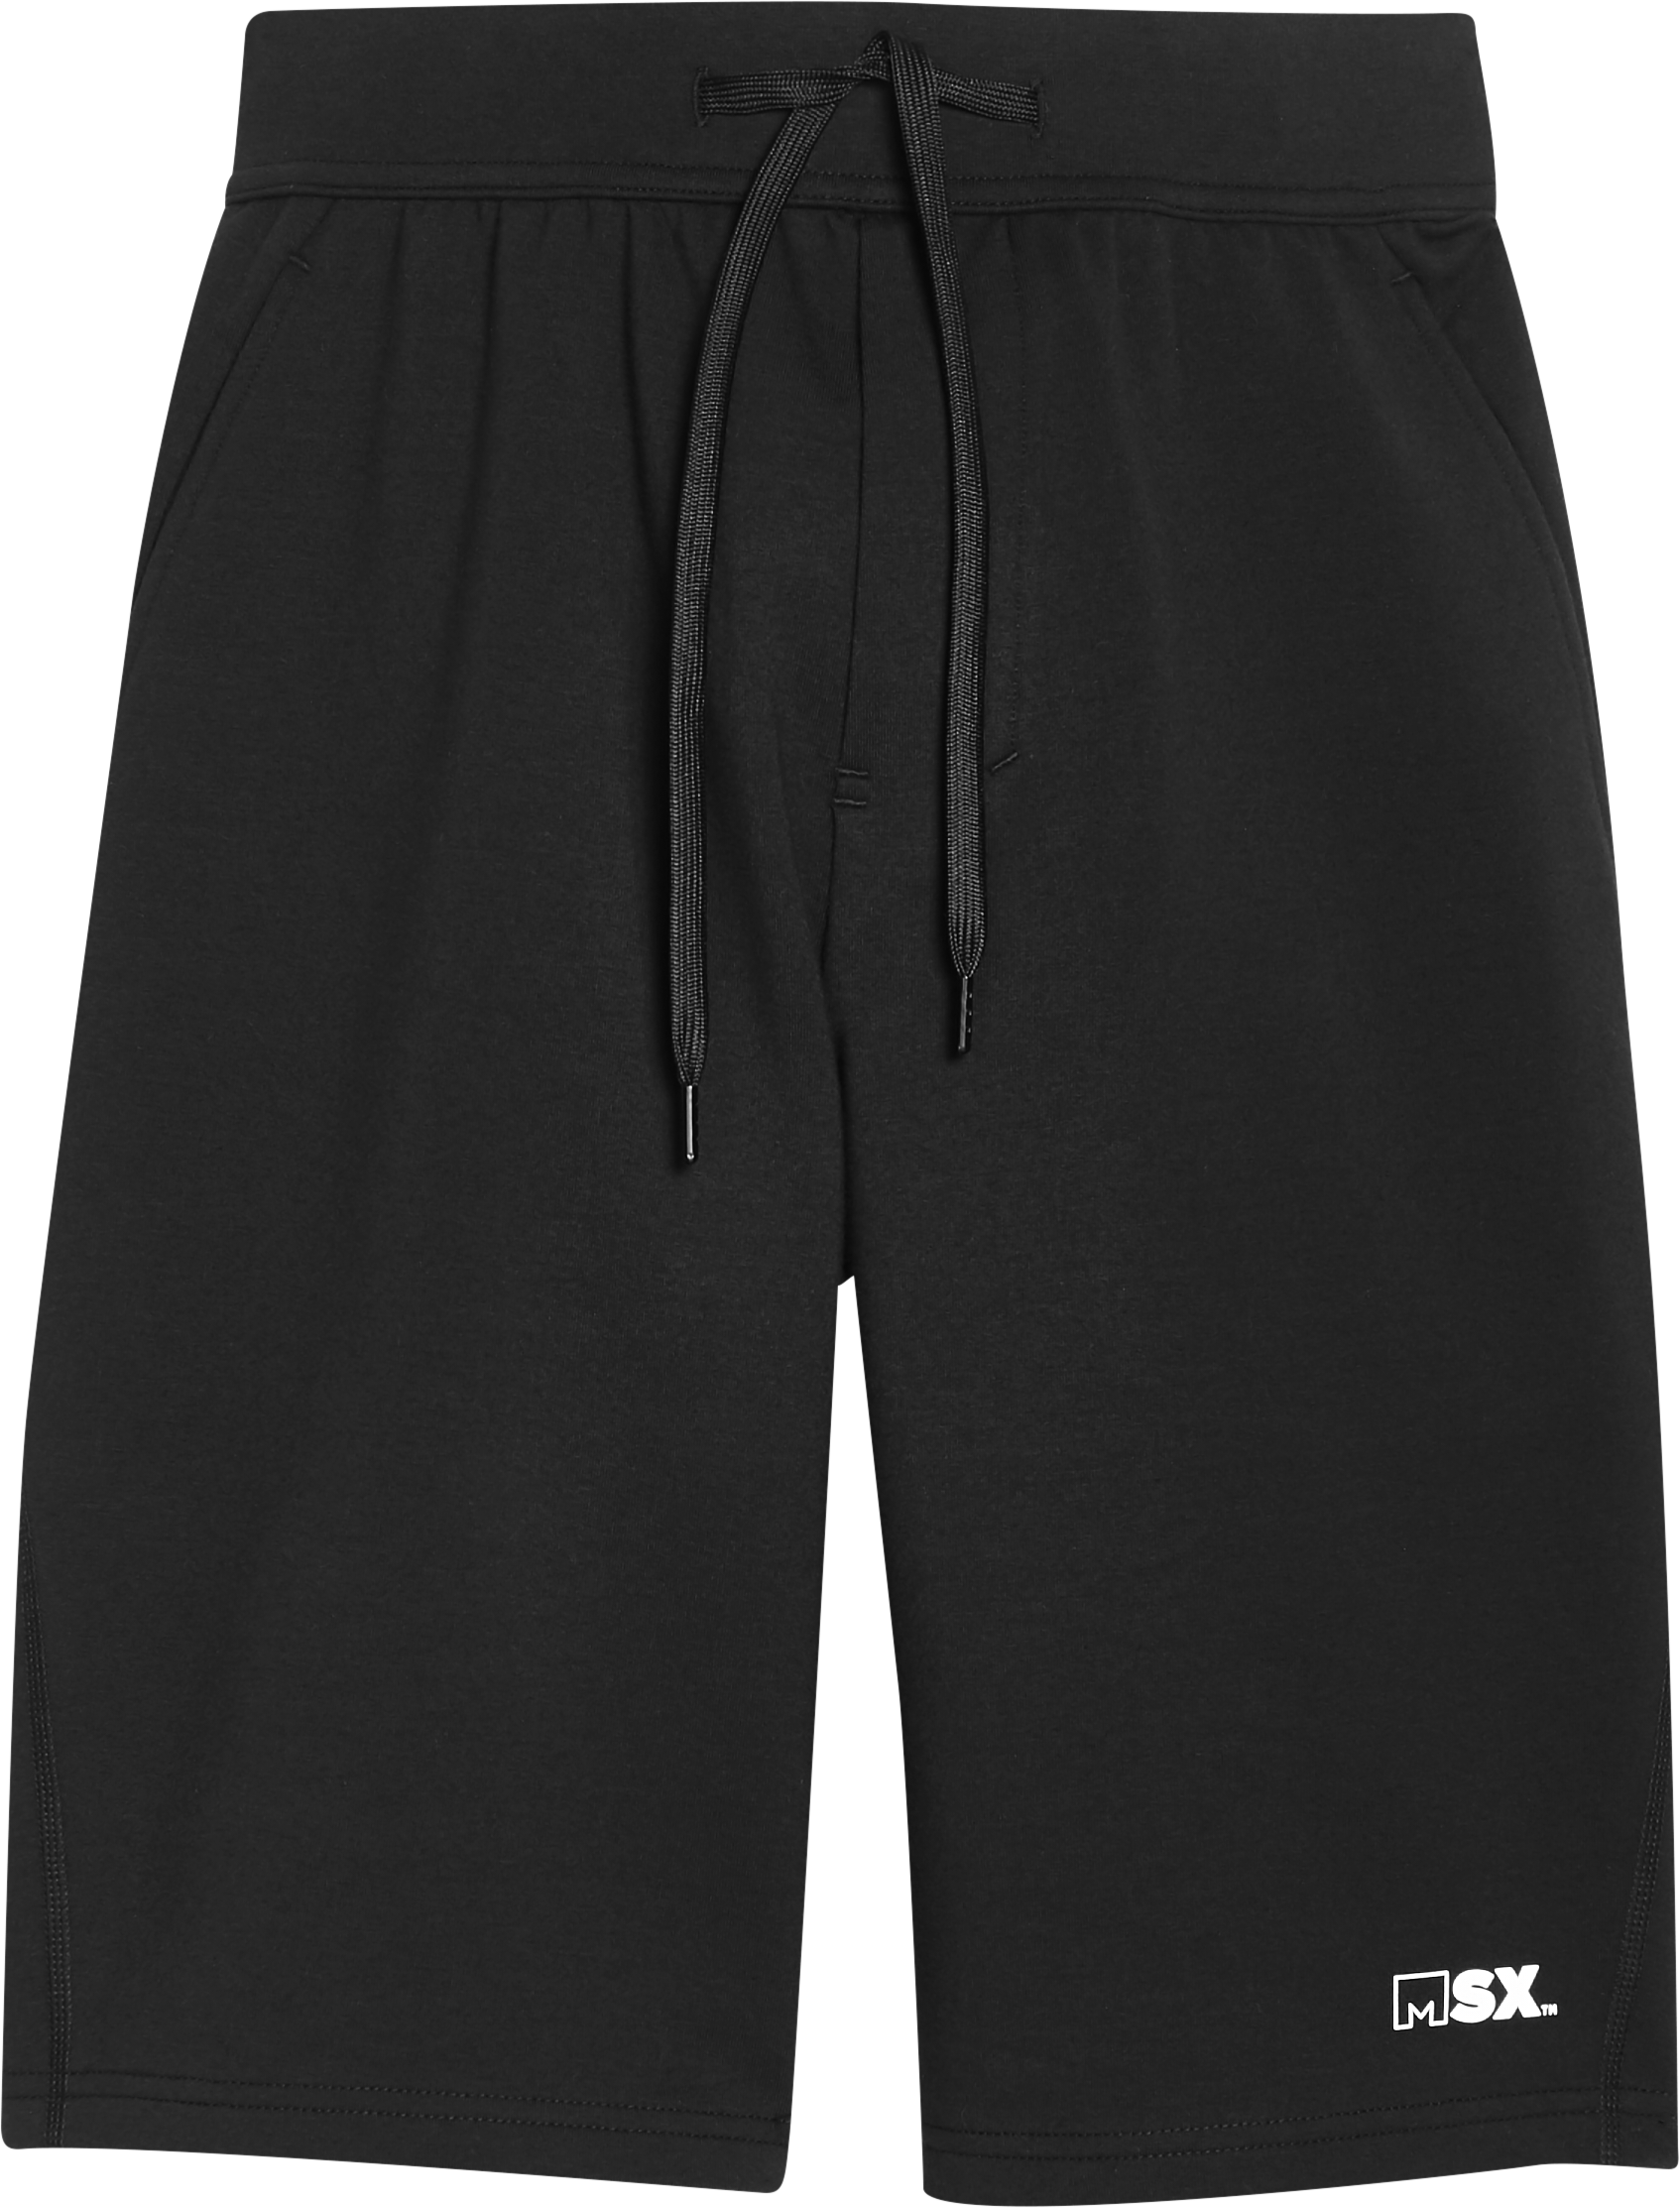 Msx By Michael Strahan Modern Fit Fleece Knit Shorts Black Mens 